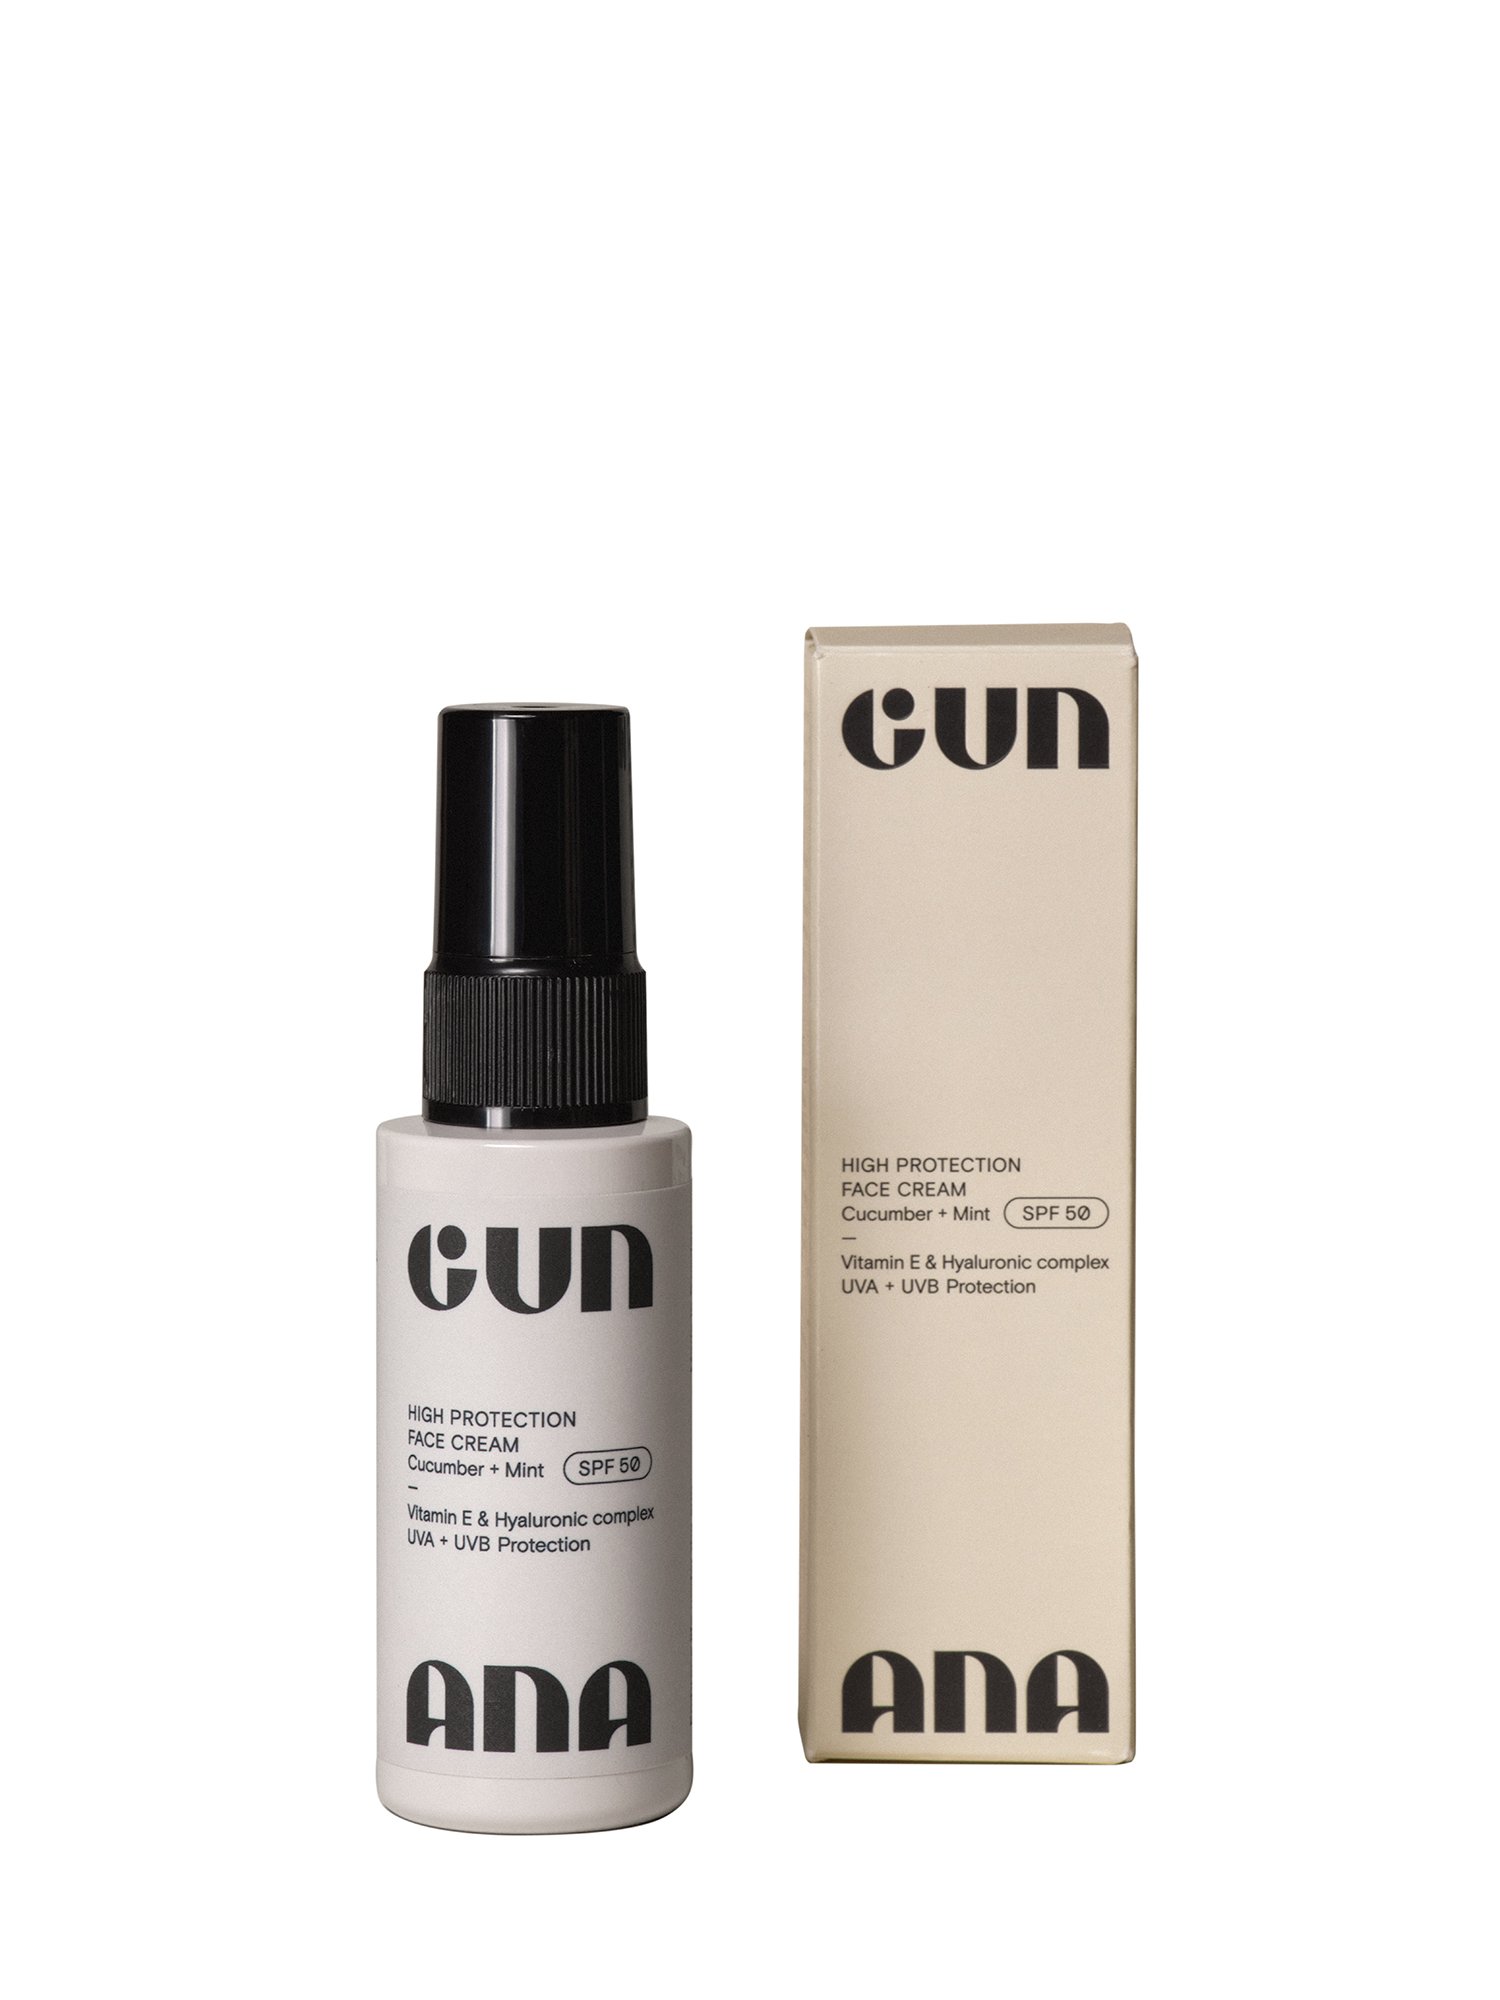 Gun Ana Face Cream SPF50 Cucumber & Mint 50 ml